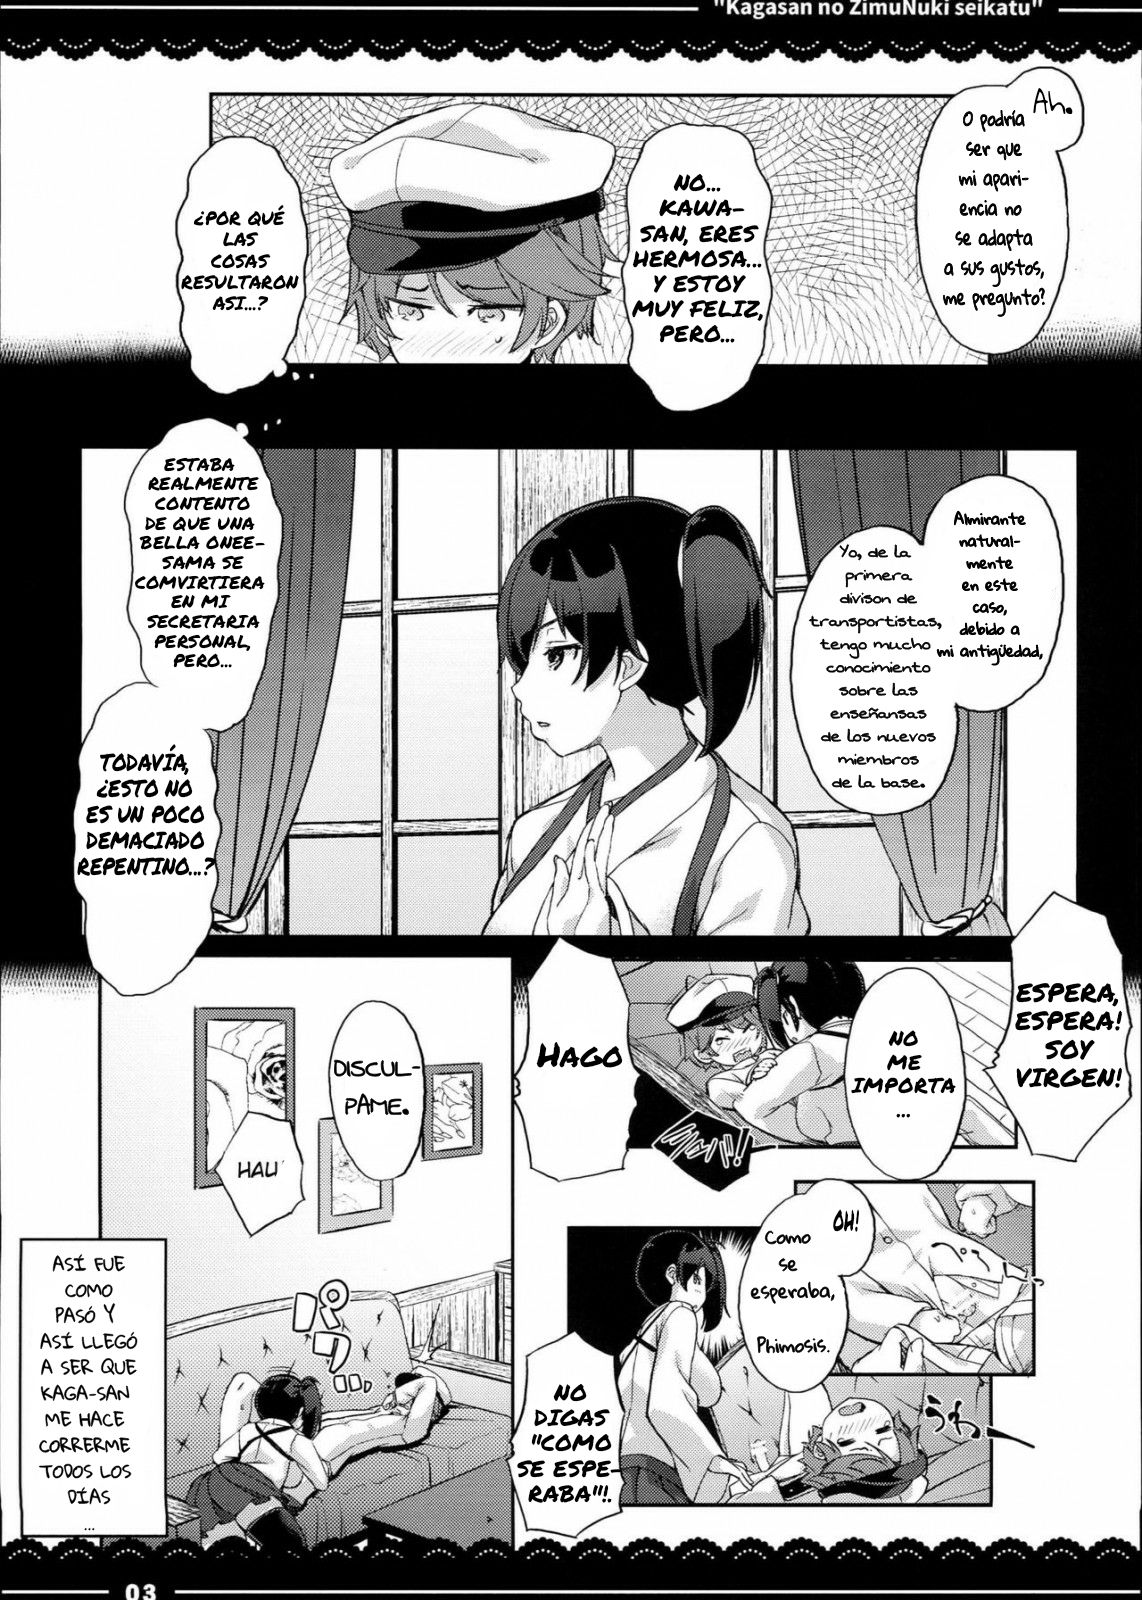 kaga-san's work skipping sex life-chapter 1 - 3